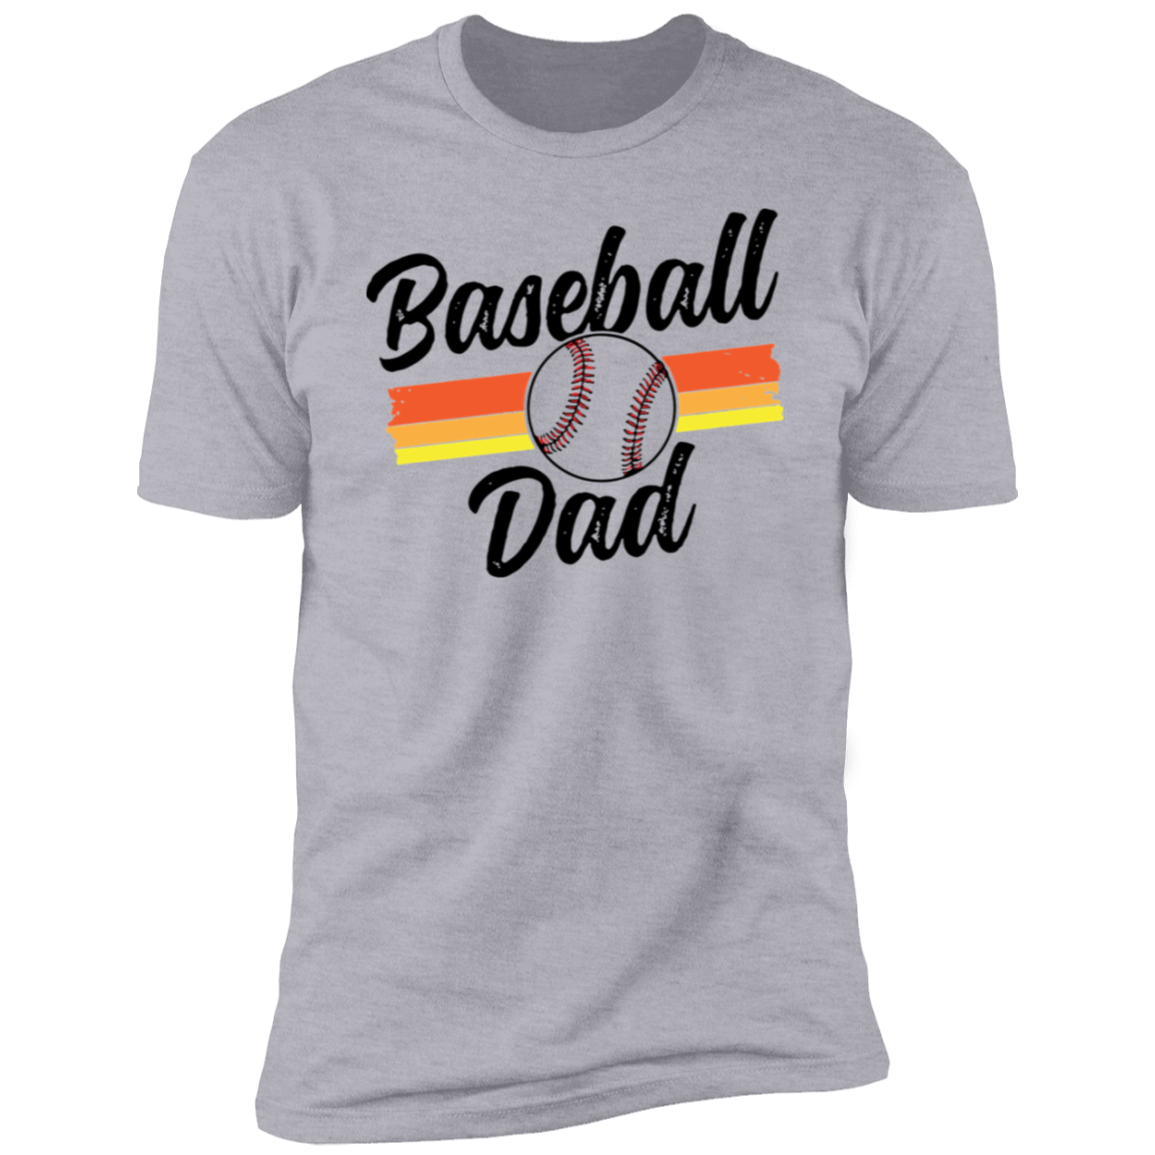 Baseball Dad Premium Men's Tee